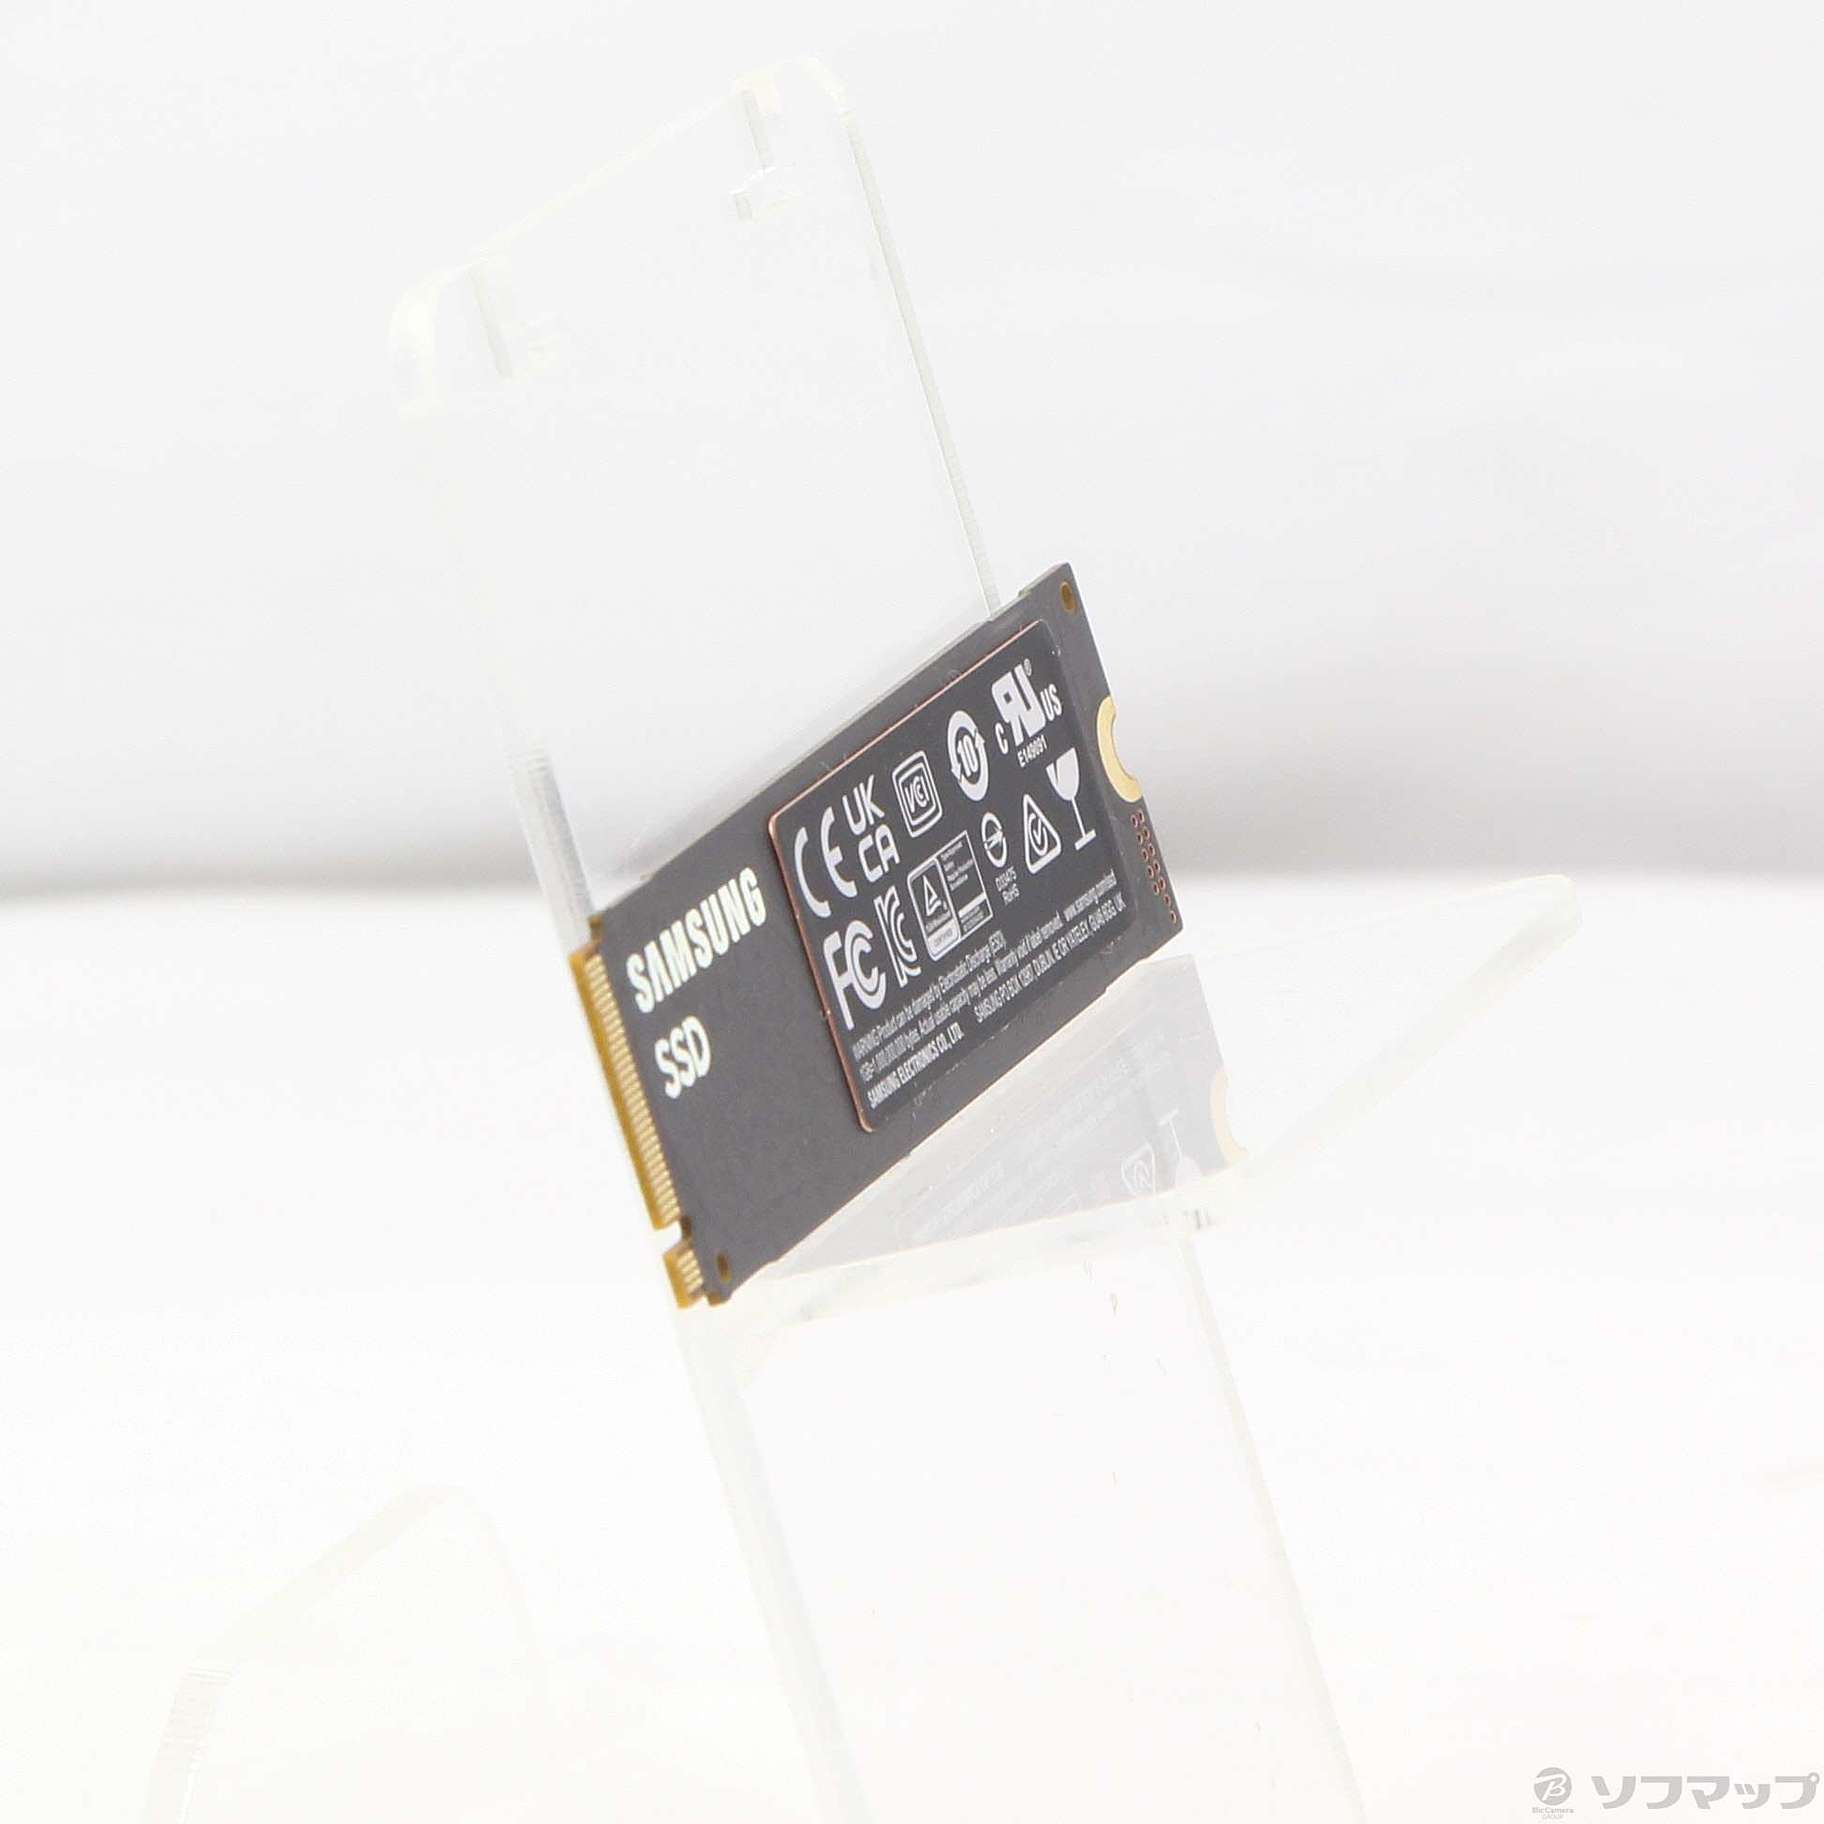 SAMSUNG SSD 980 MZ-V8V500B/IT(980 500GB)